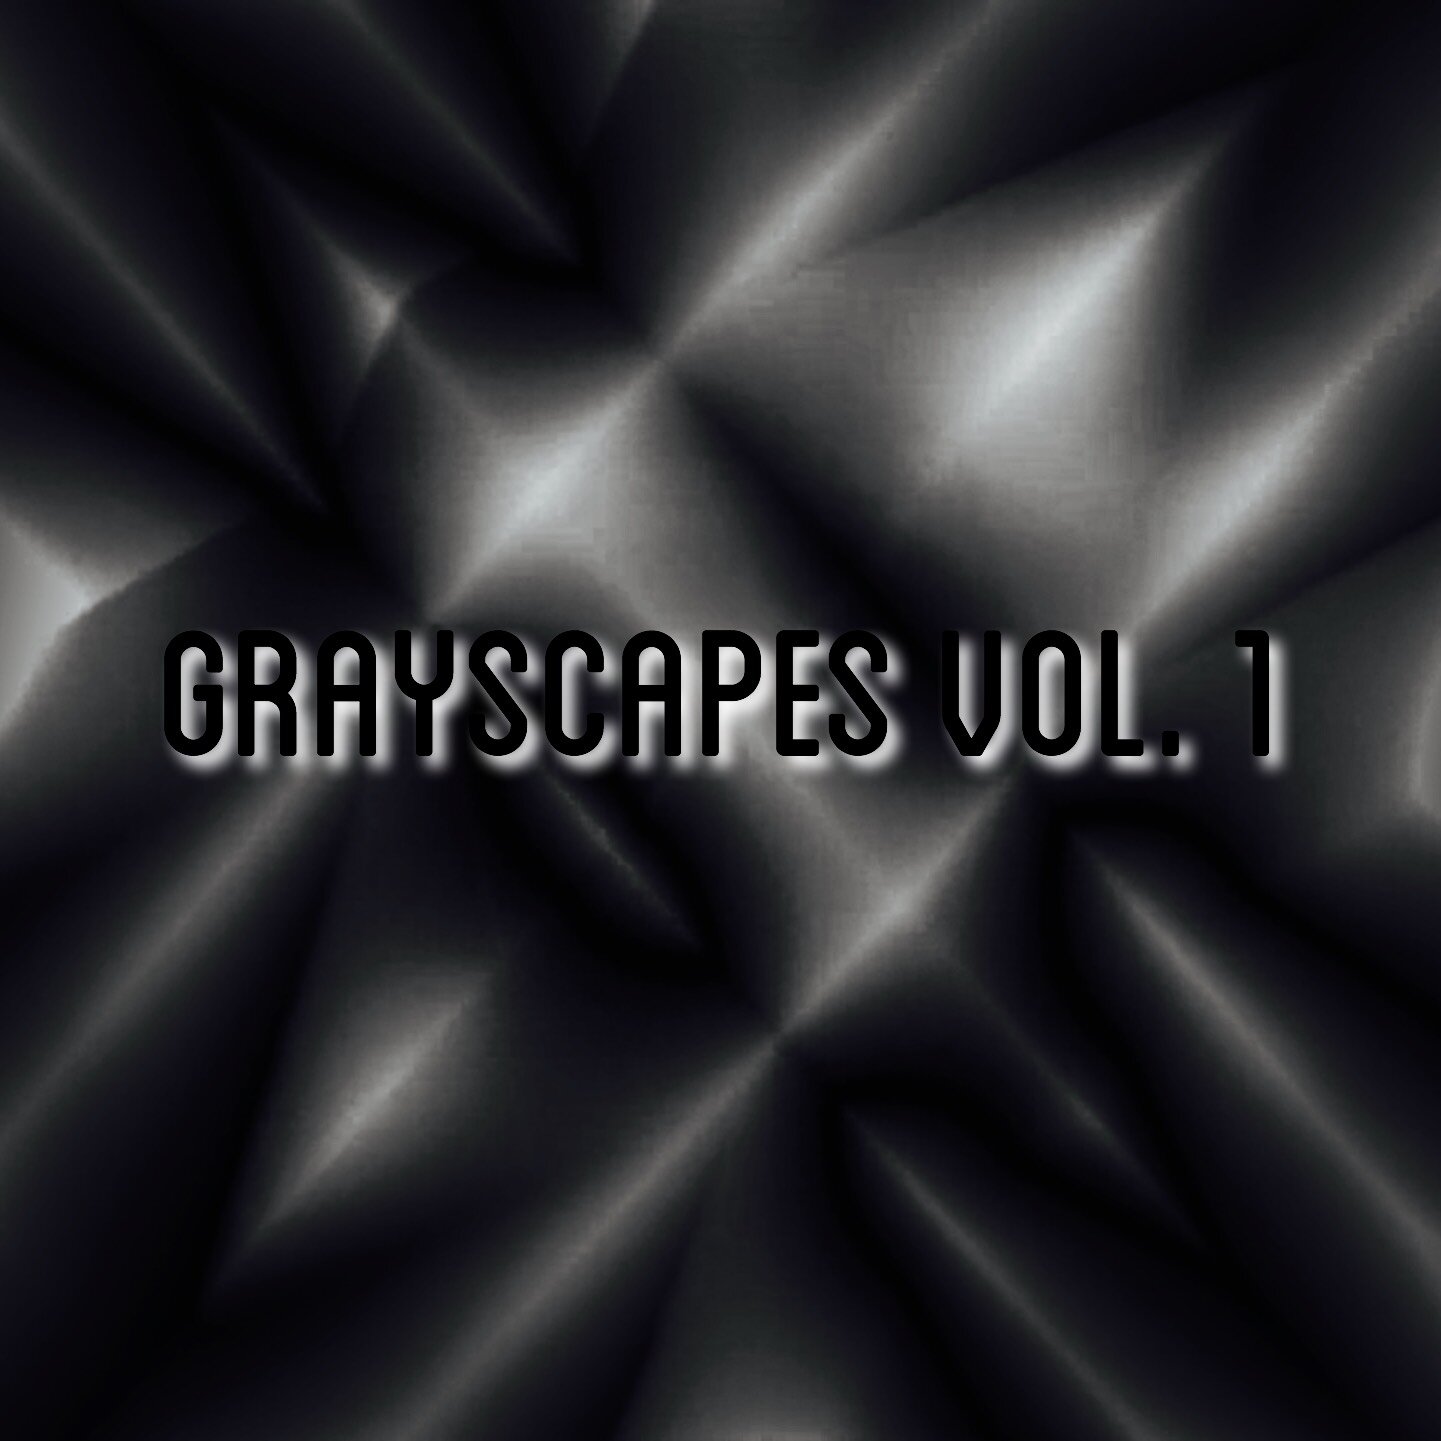 GrayscapesVol1.jpg